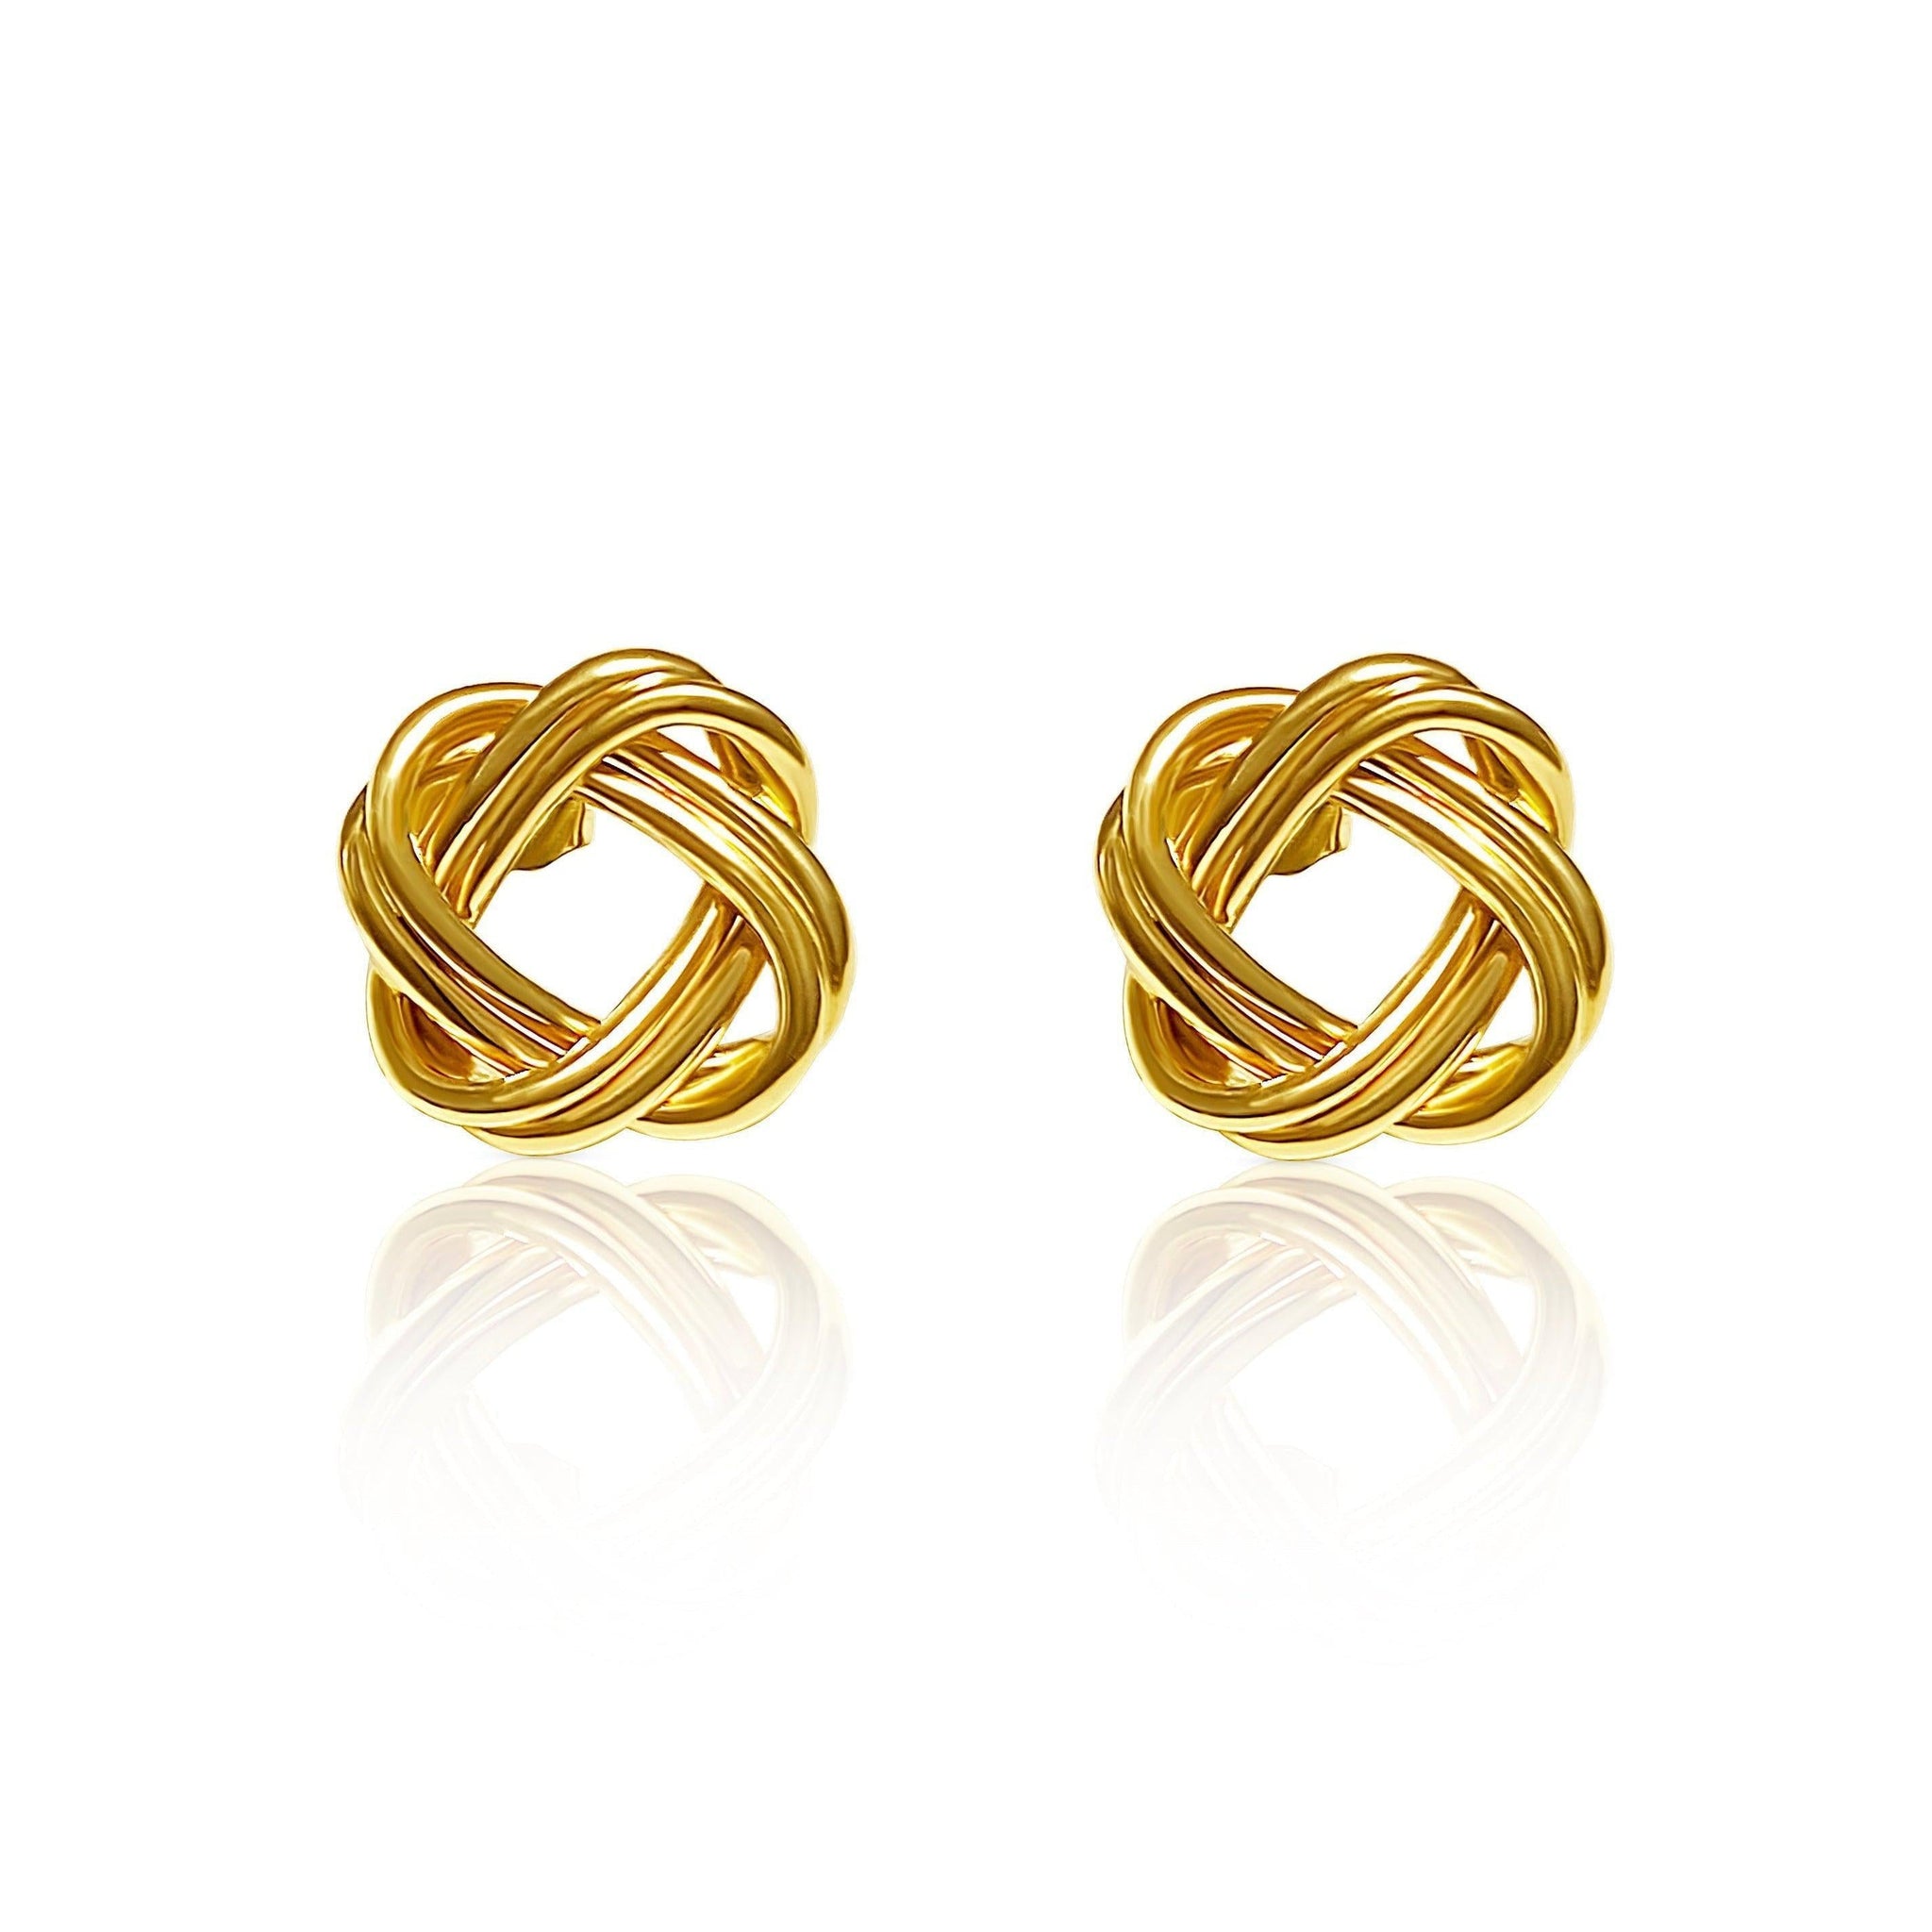 Copy of 14k Solid Gold Knot Stud Earrings - ASSAY